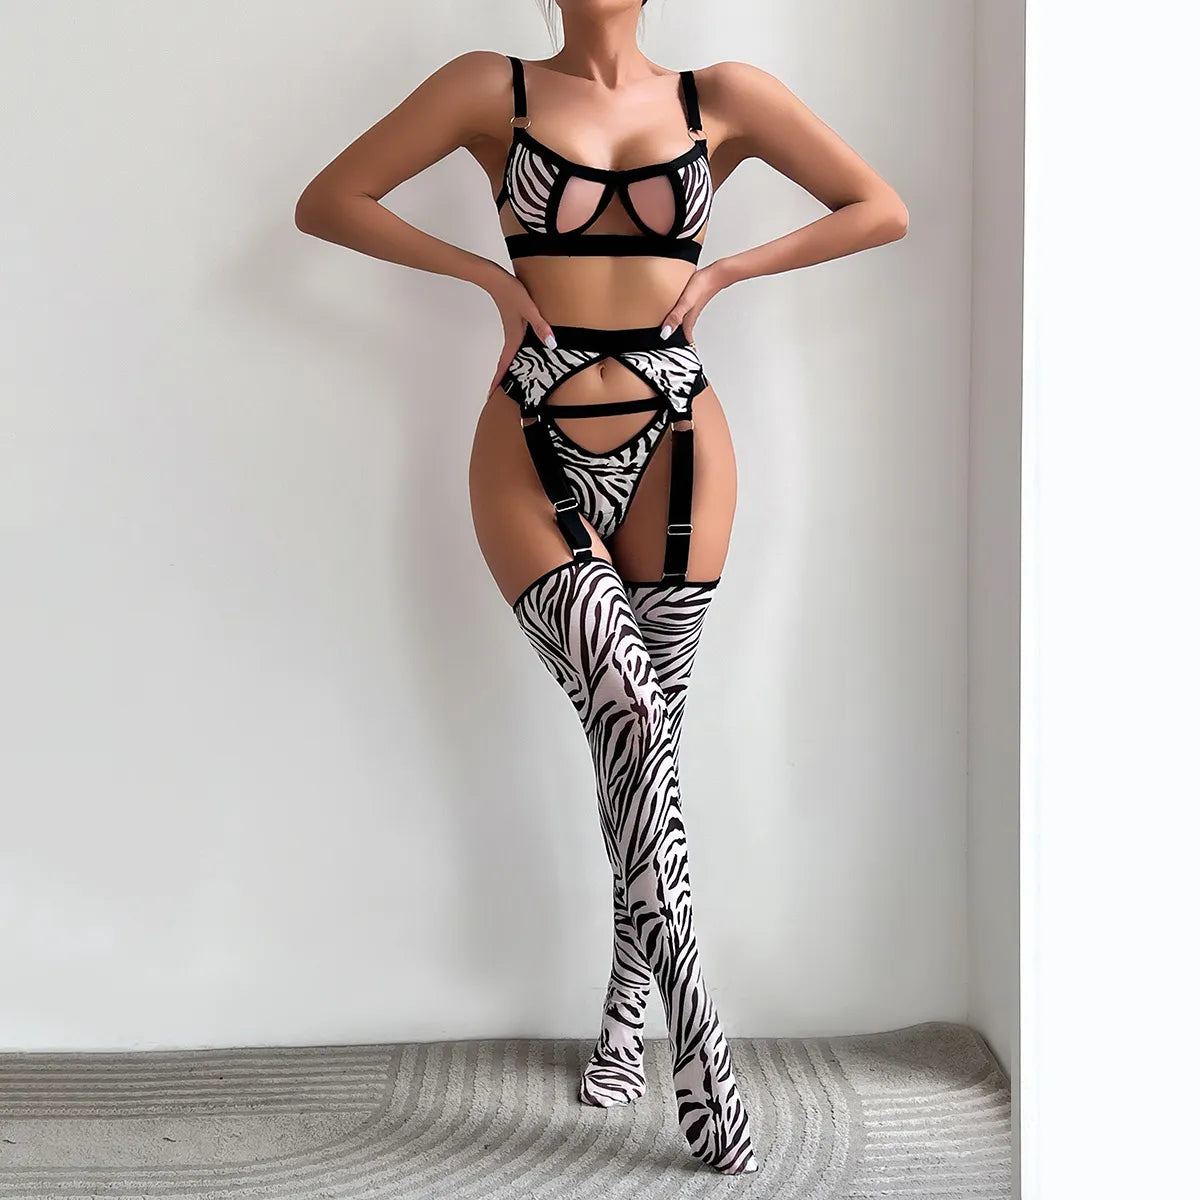 Zebra Sexy Strümpfe Dessous Cup Out BH Brasilianisches Intimset Fantasy Kostüm Passende G-String Outfits